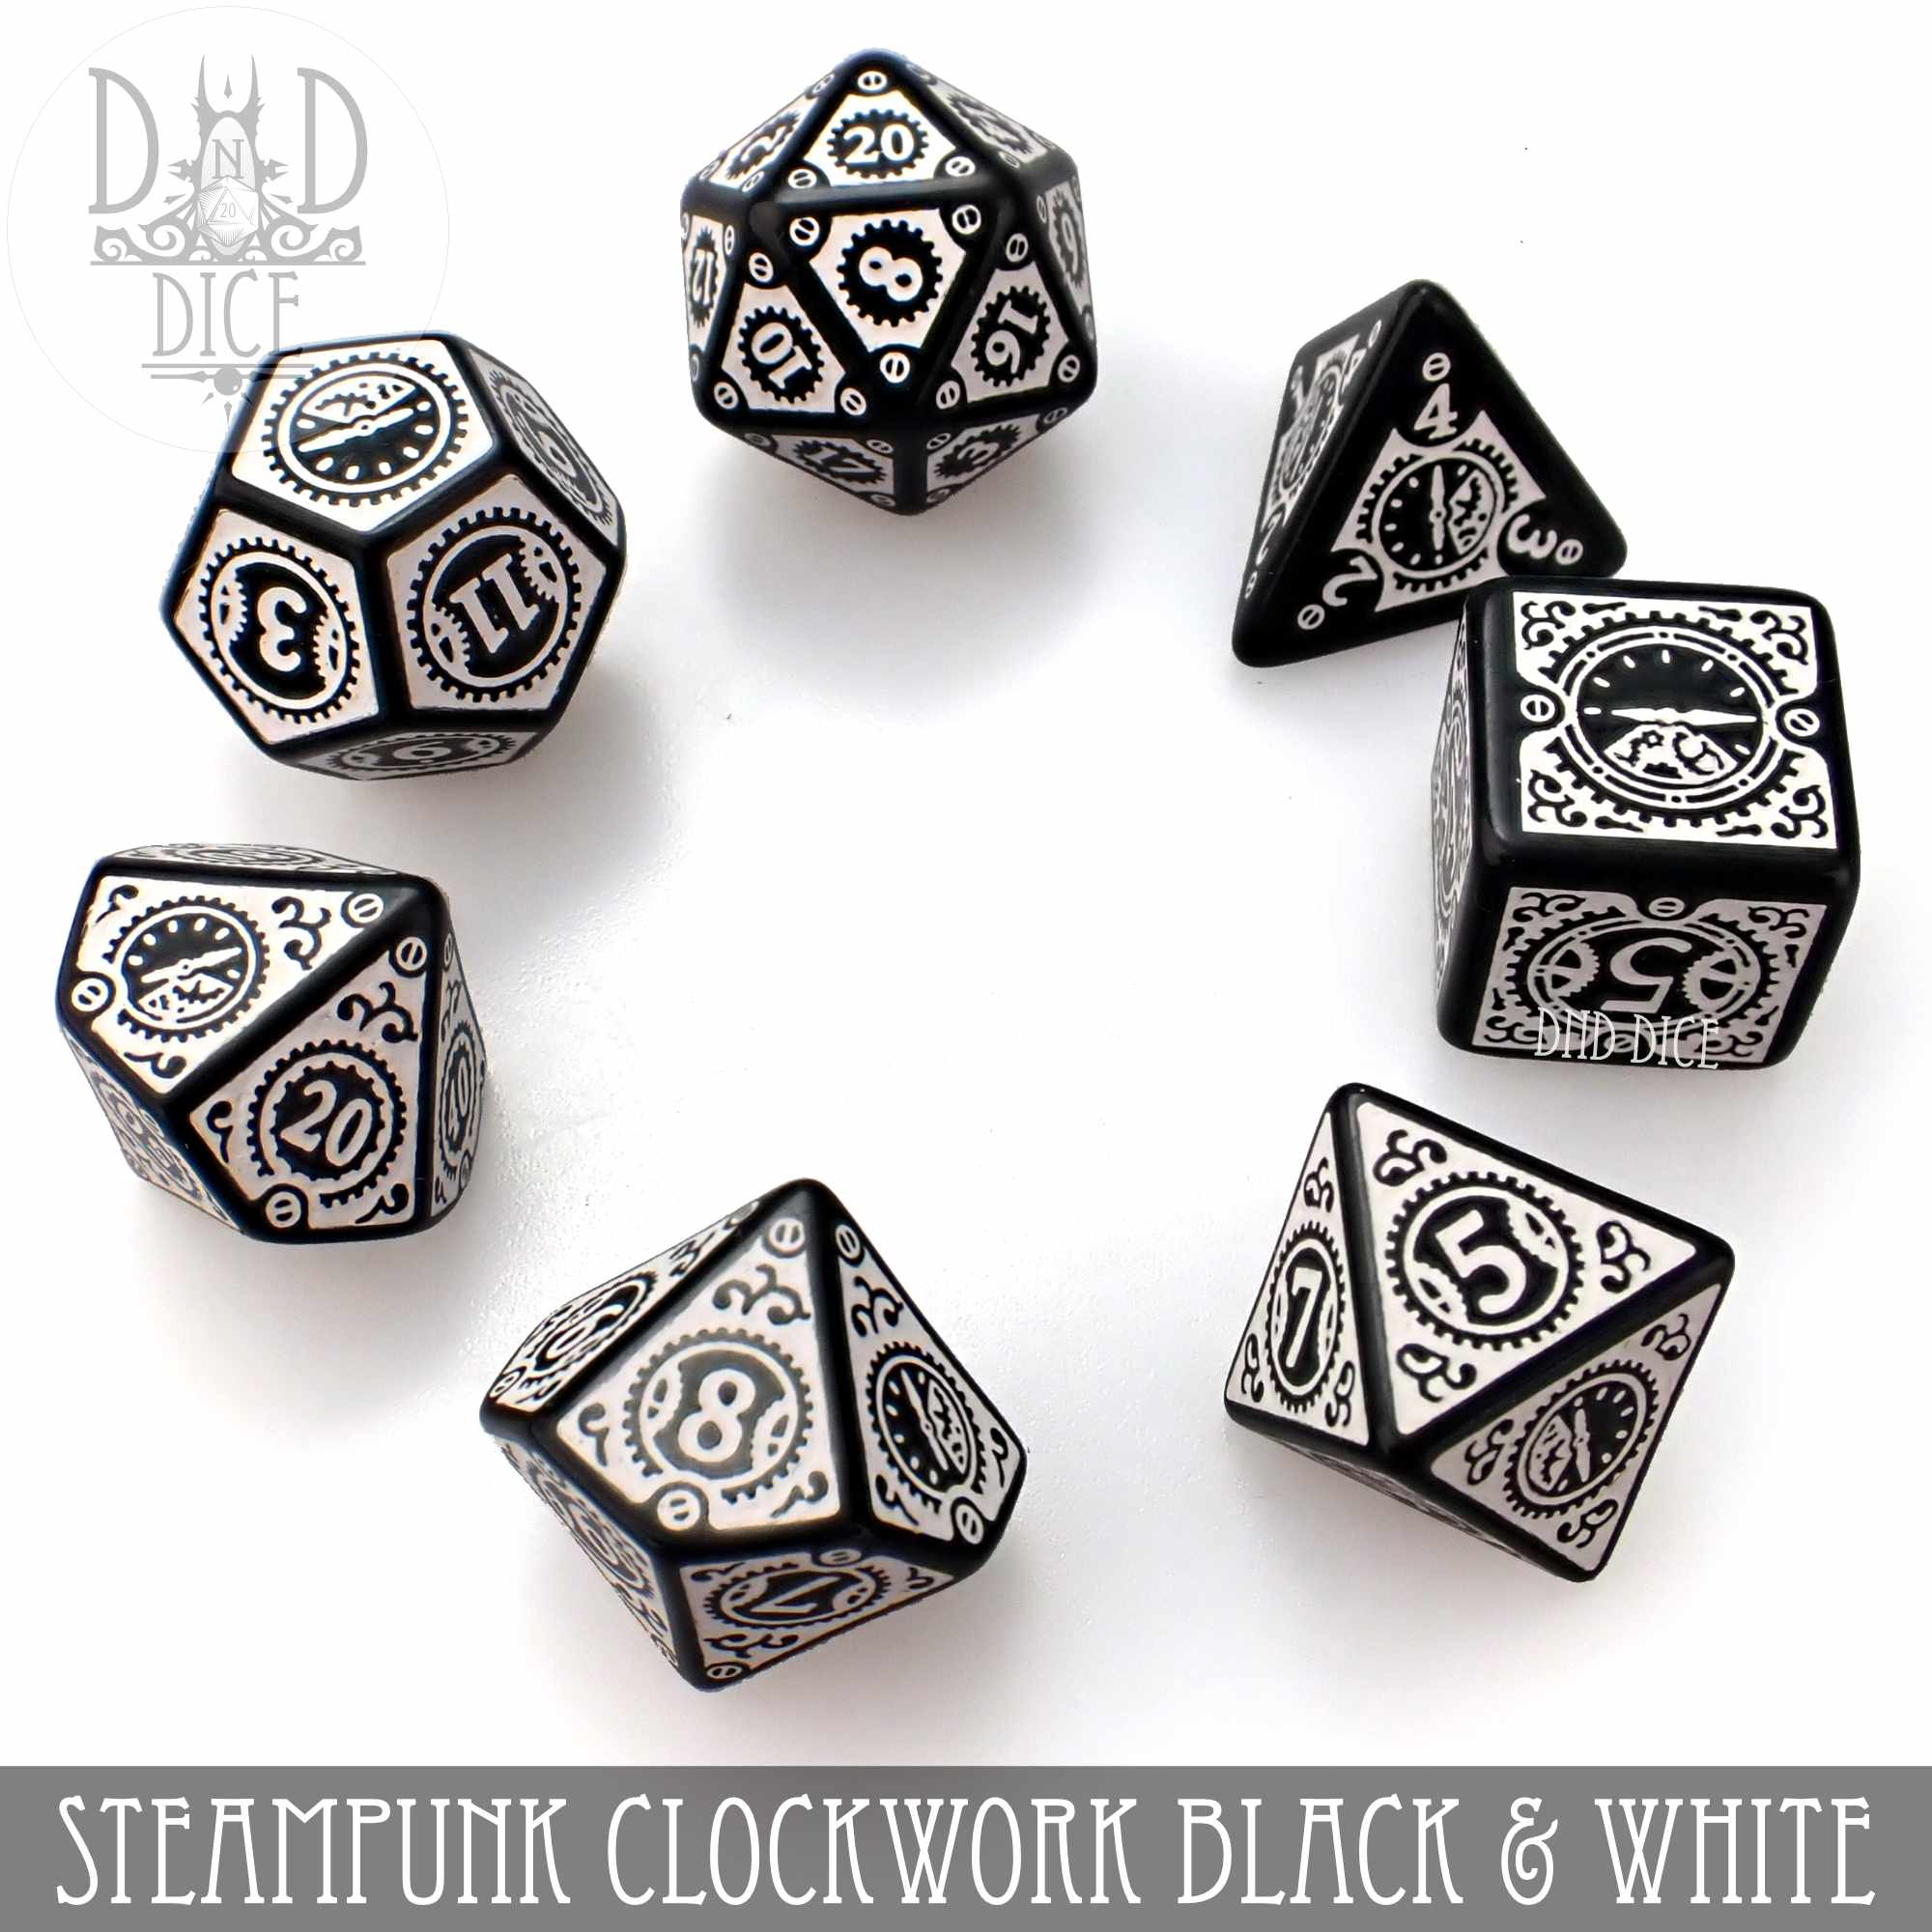 Steampunk Clockwork Black Dice Set